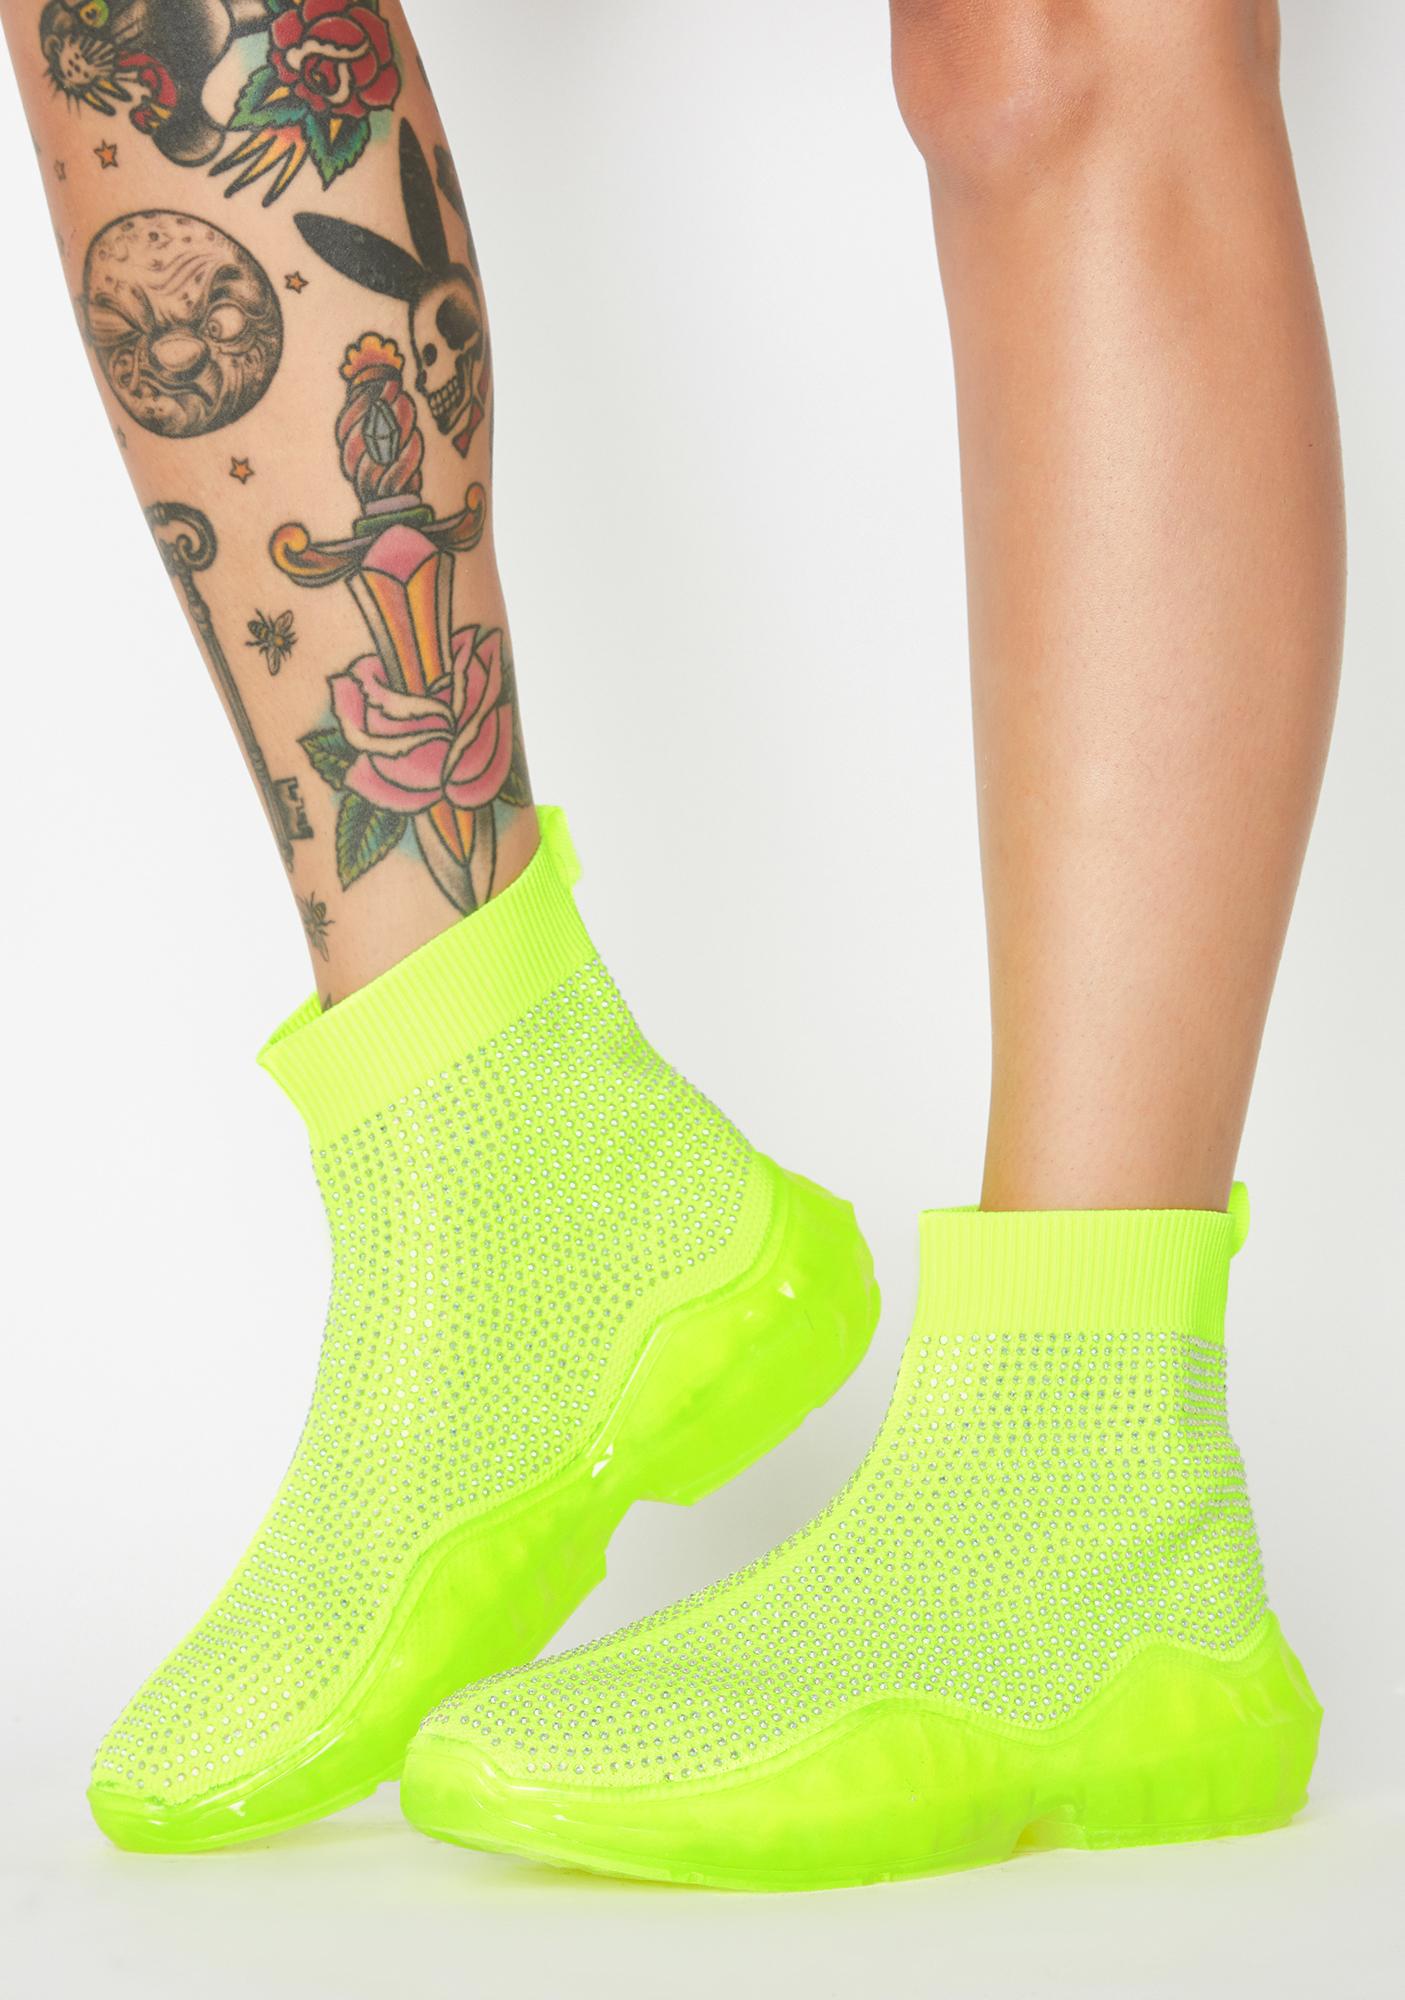 green sock sneakers